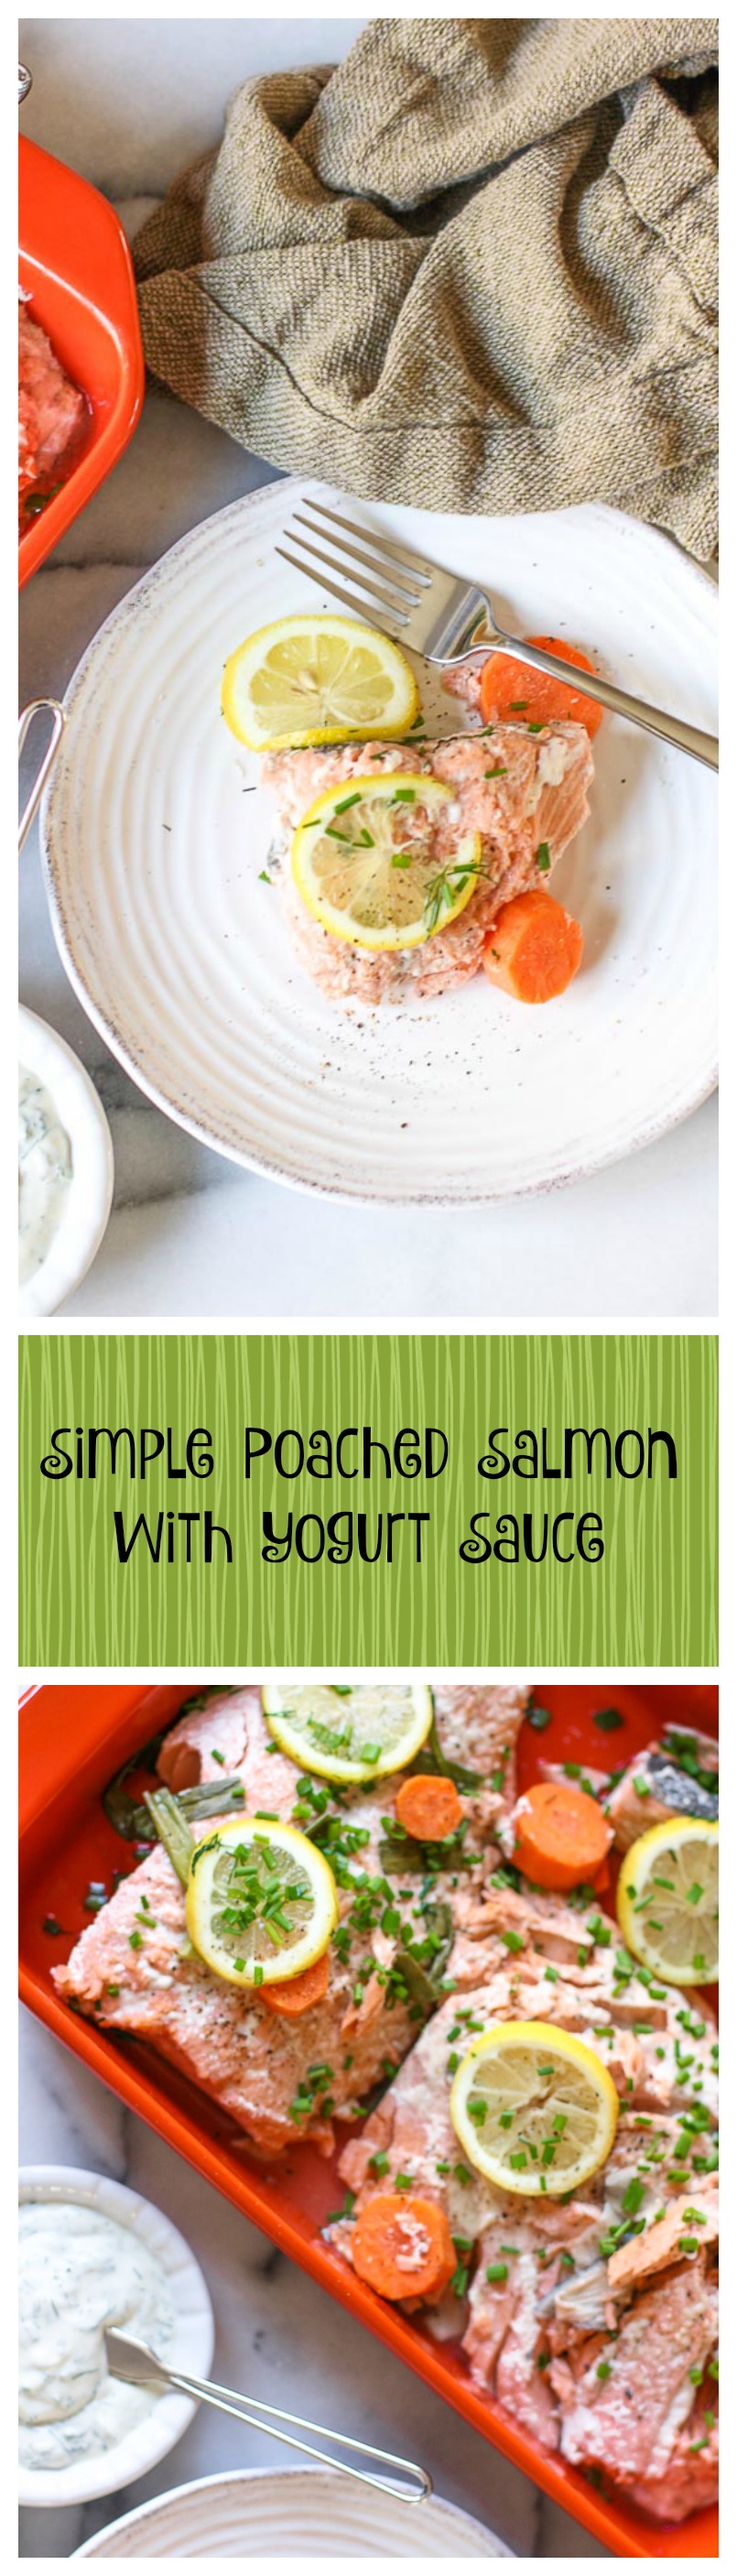 simple poached salmon with yogurt sauce